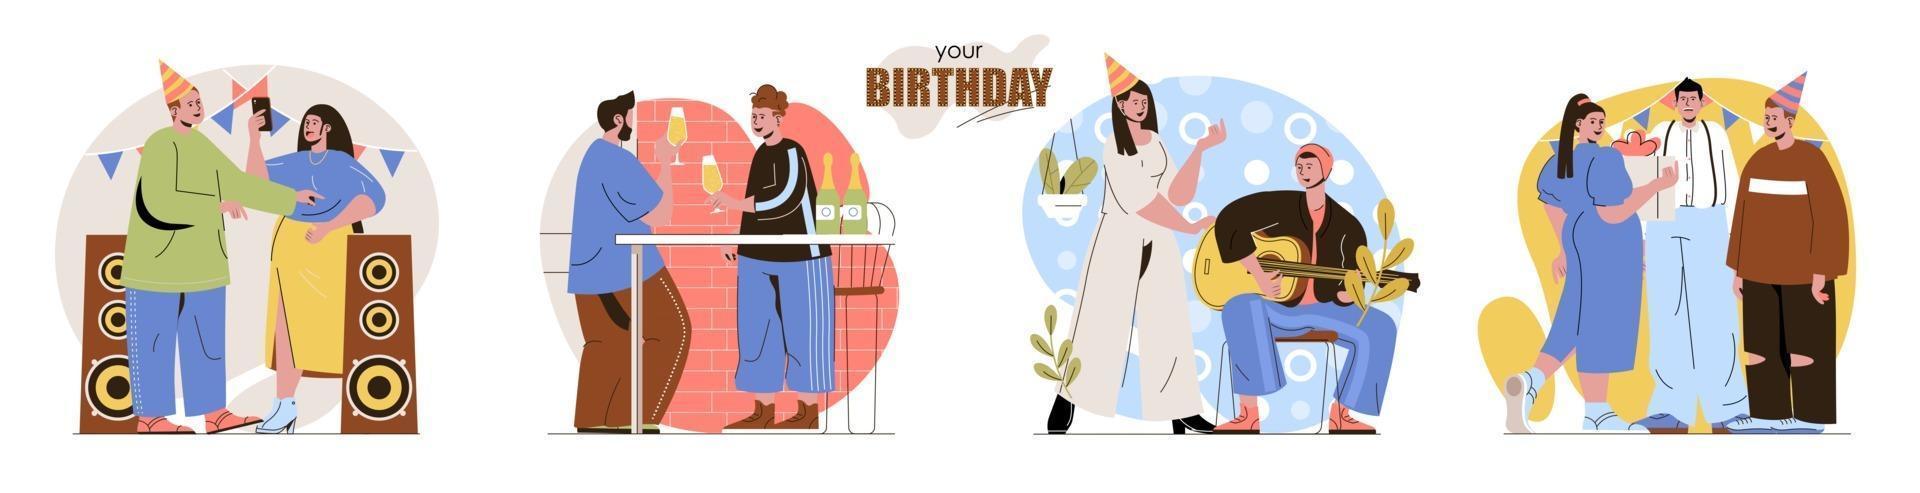 Your Birthday concept scenes set vector